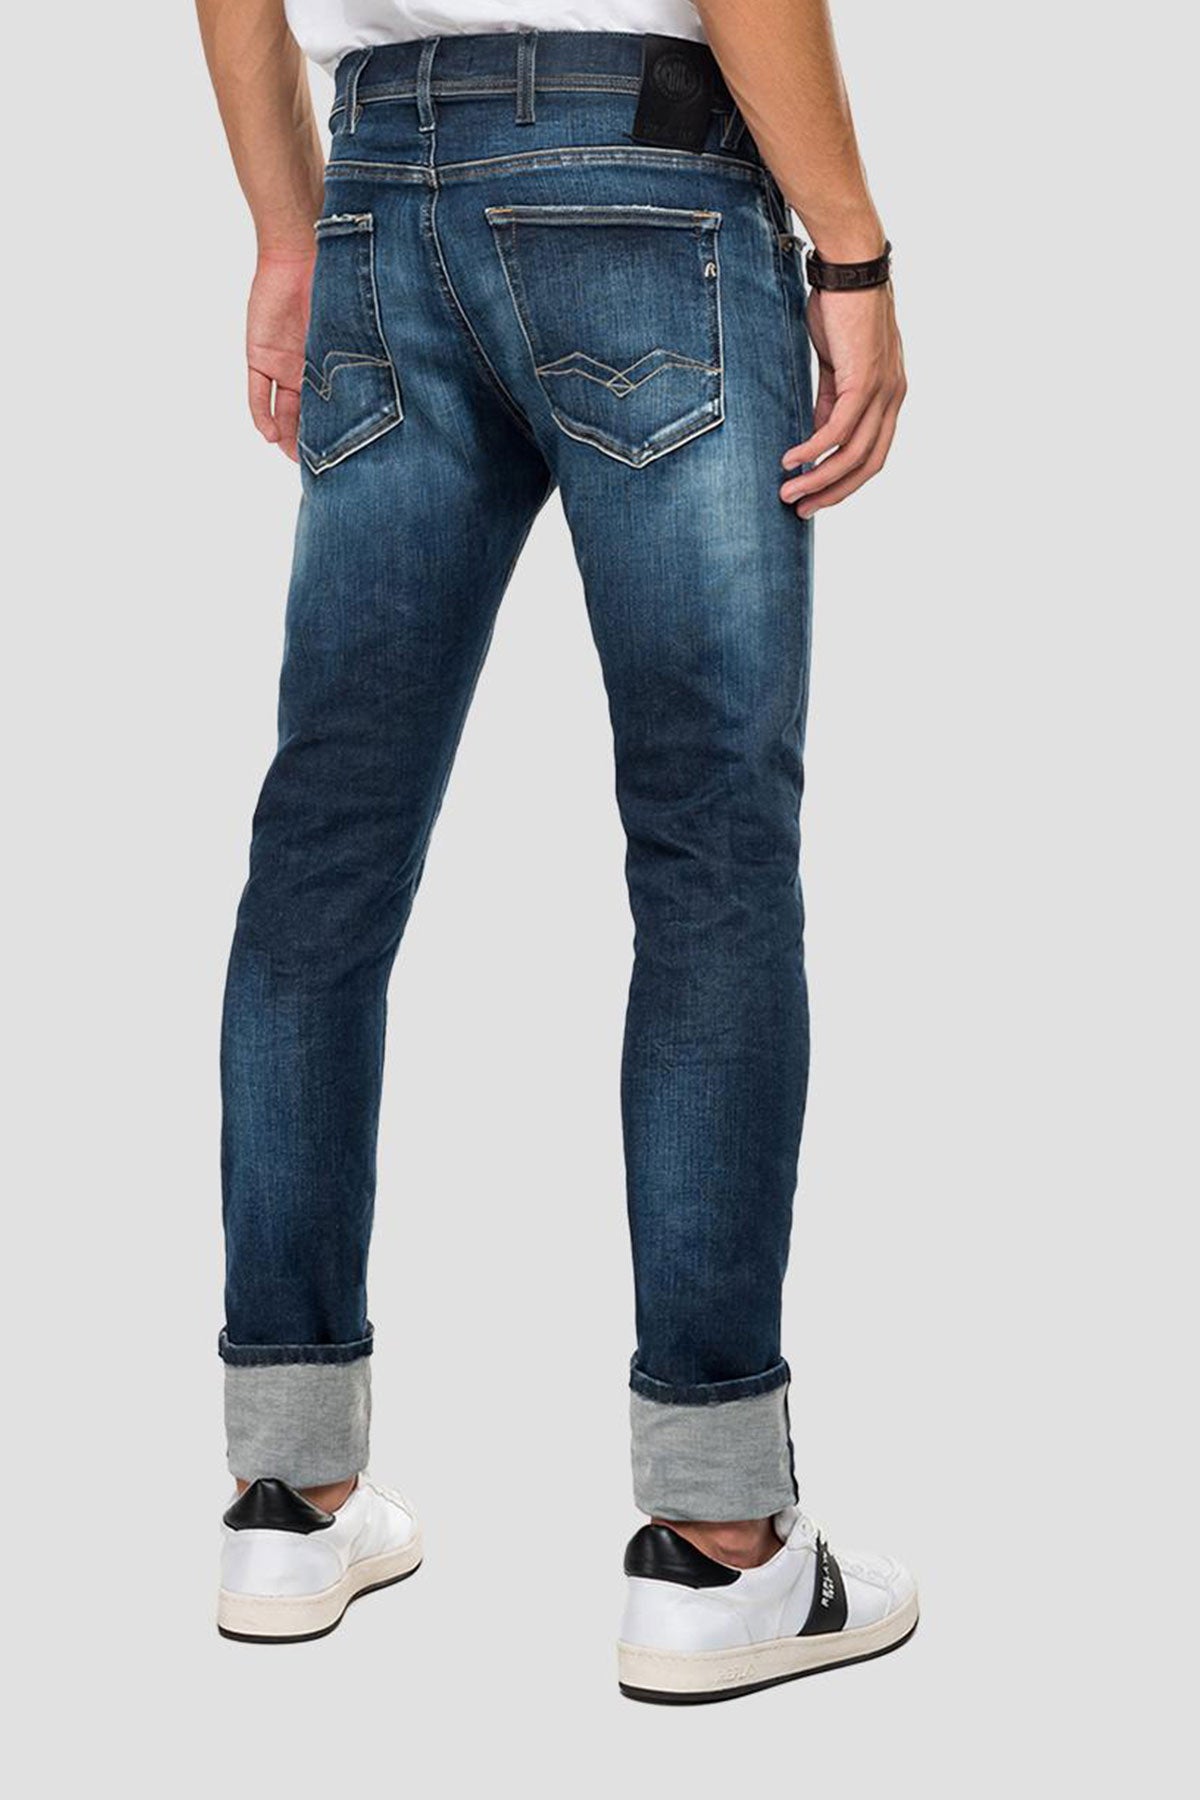 Replay Hyperflex Bio Jondrill Skinny Fit Jeans-Libas Trendy Fashion Store